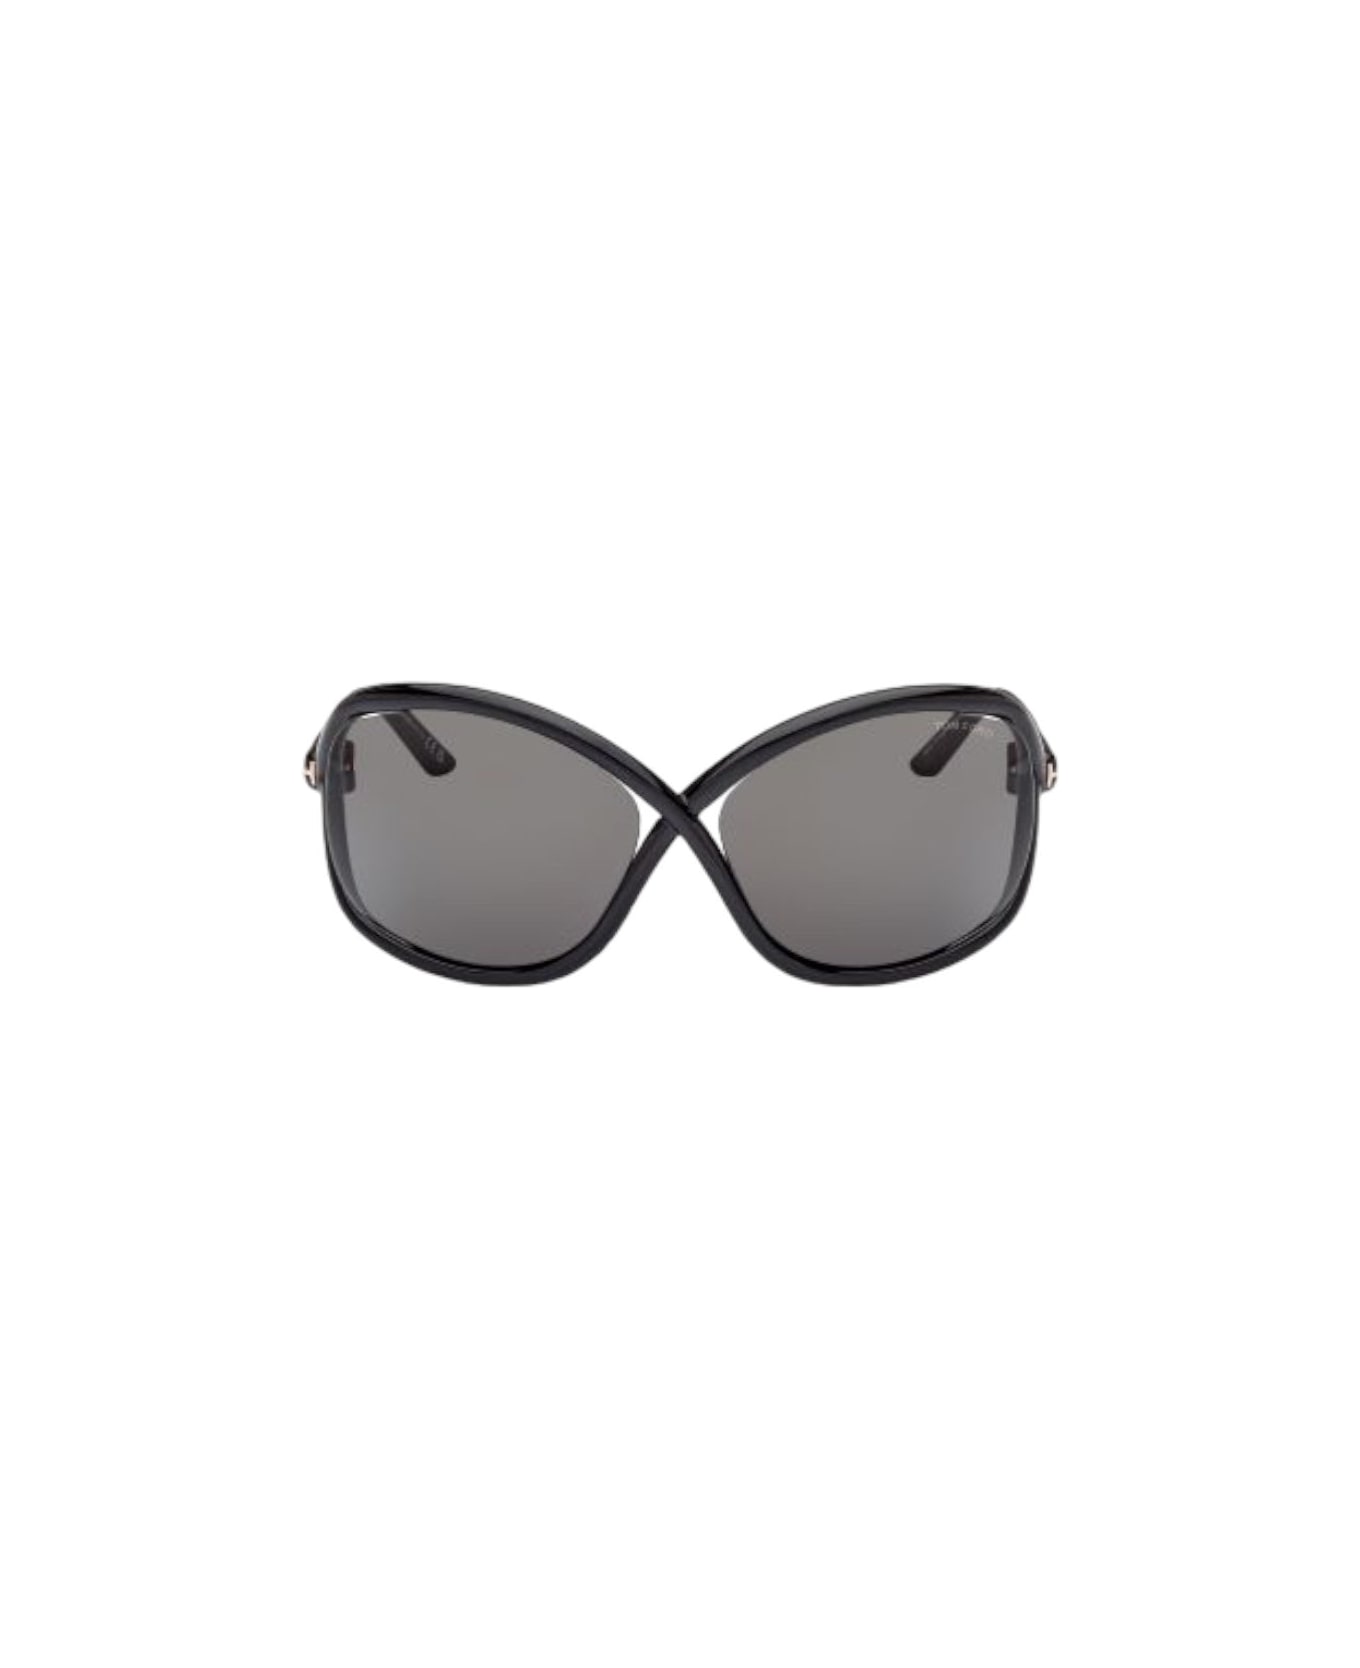 Tom Ford Eyewear Bettina Sunglasses